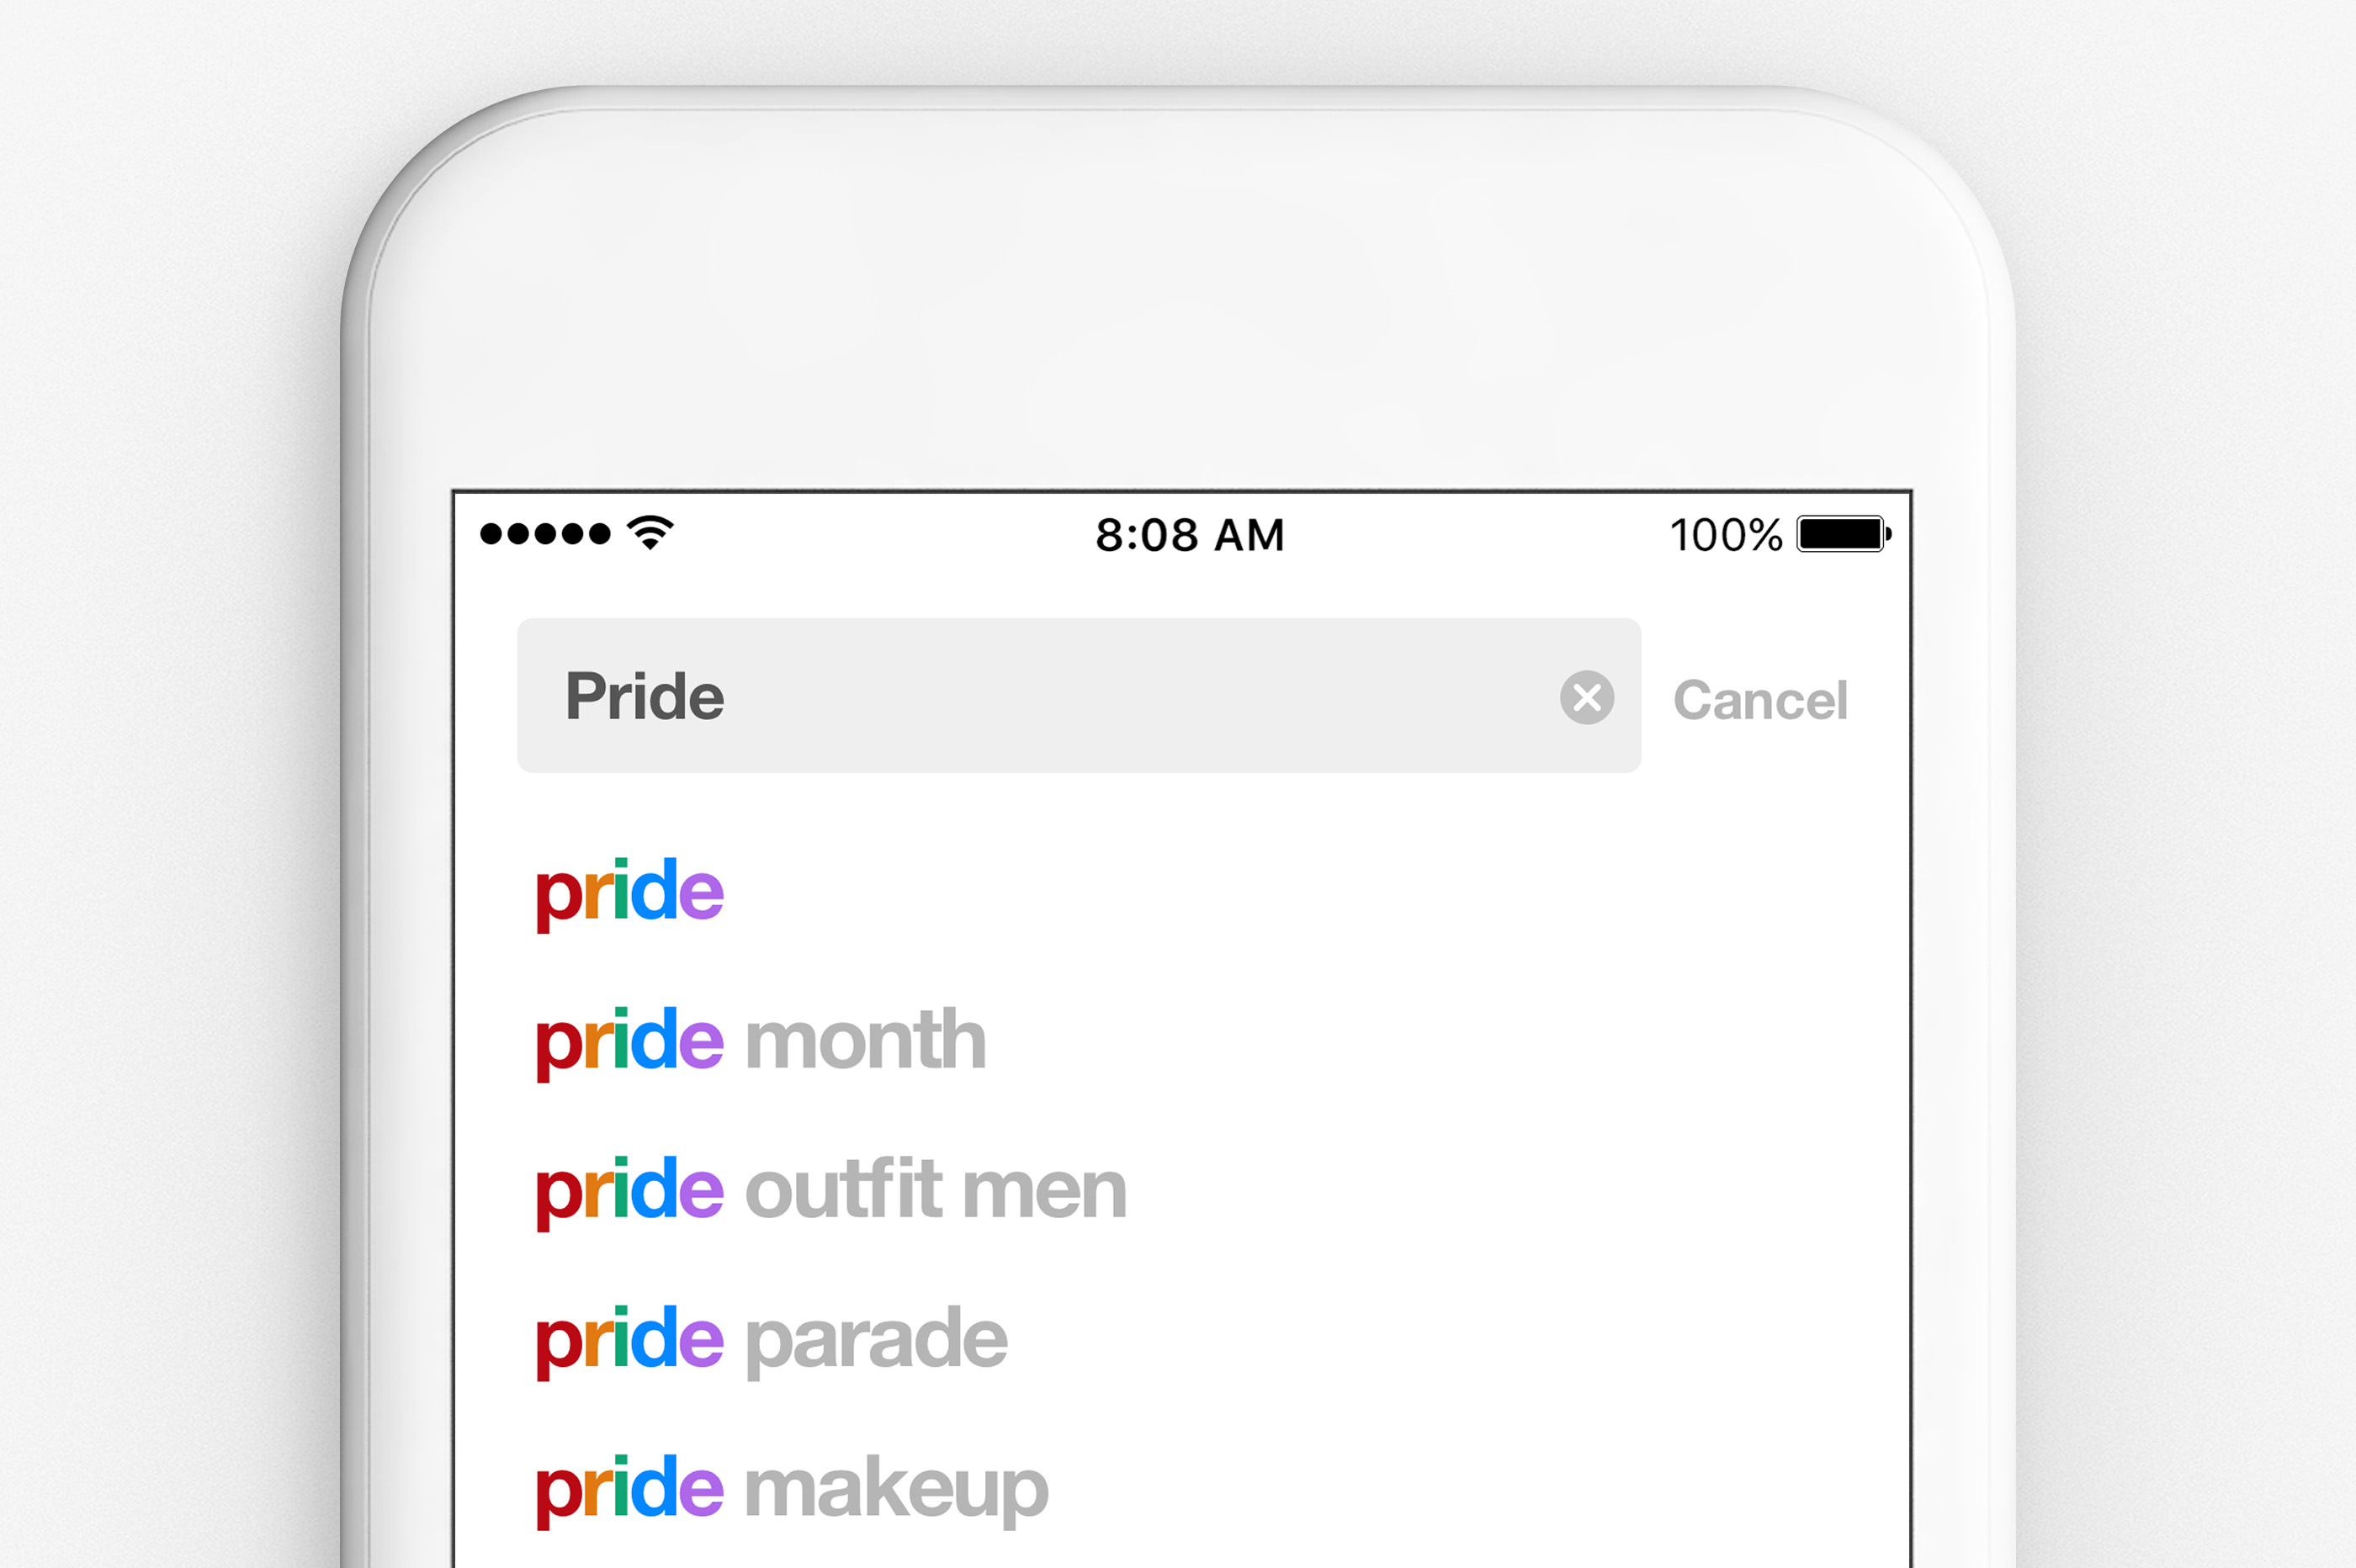 Pride queries